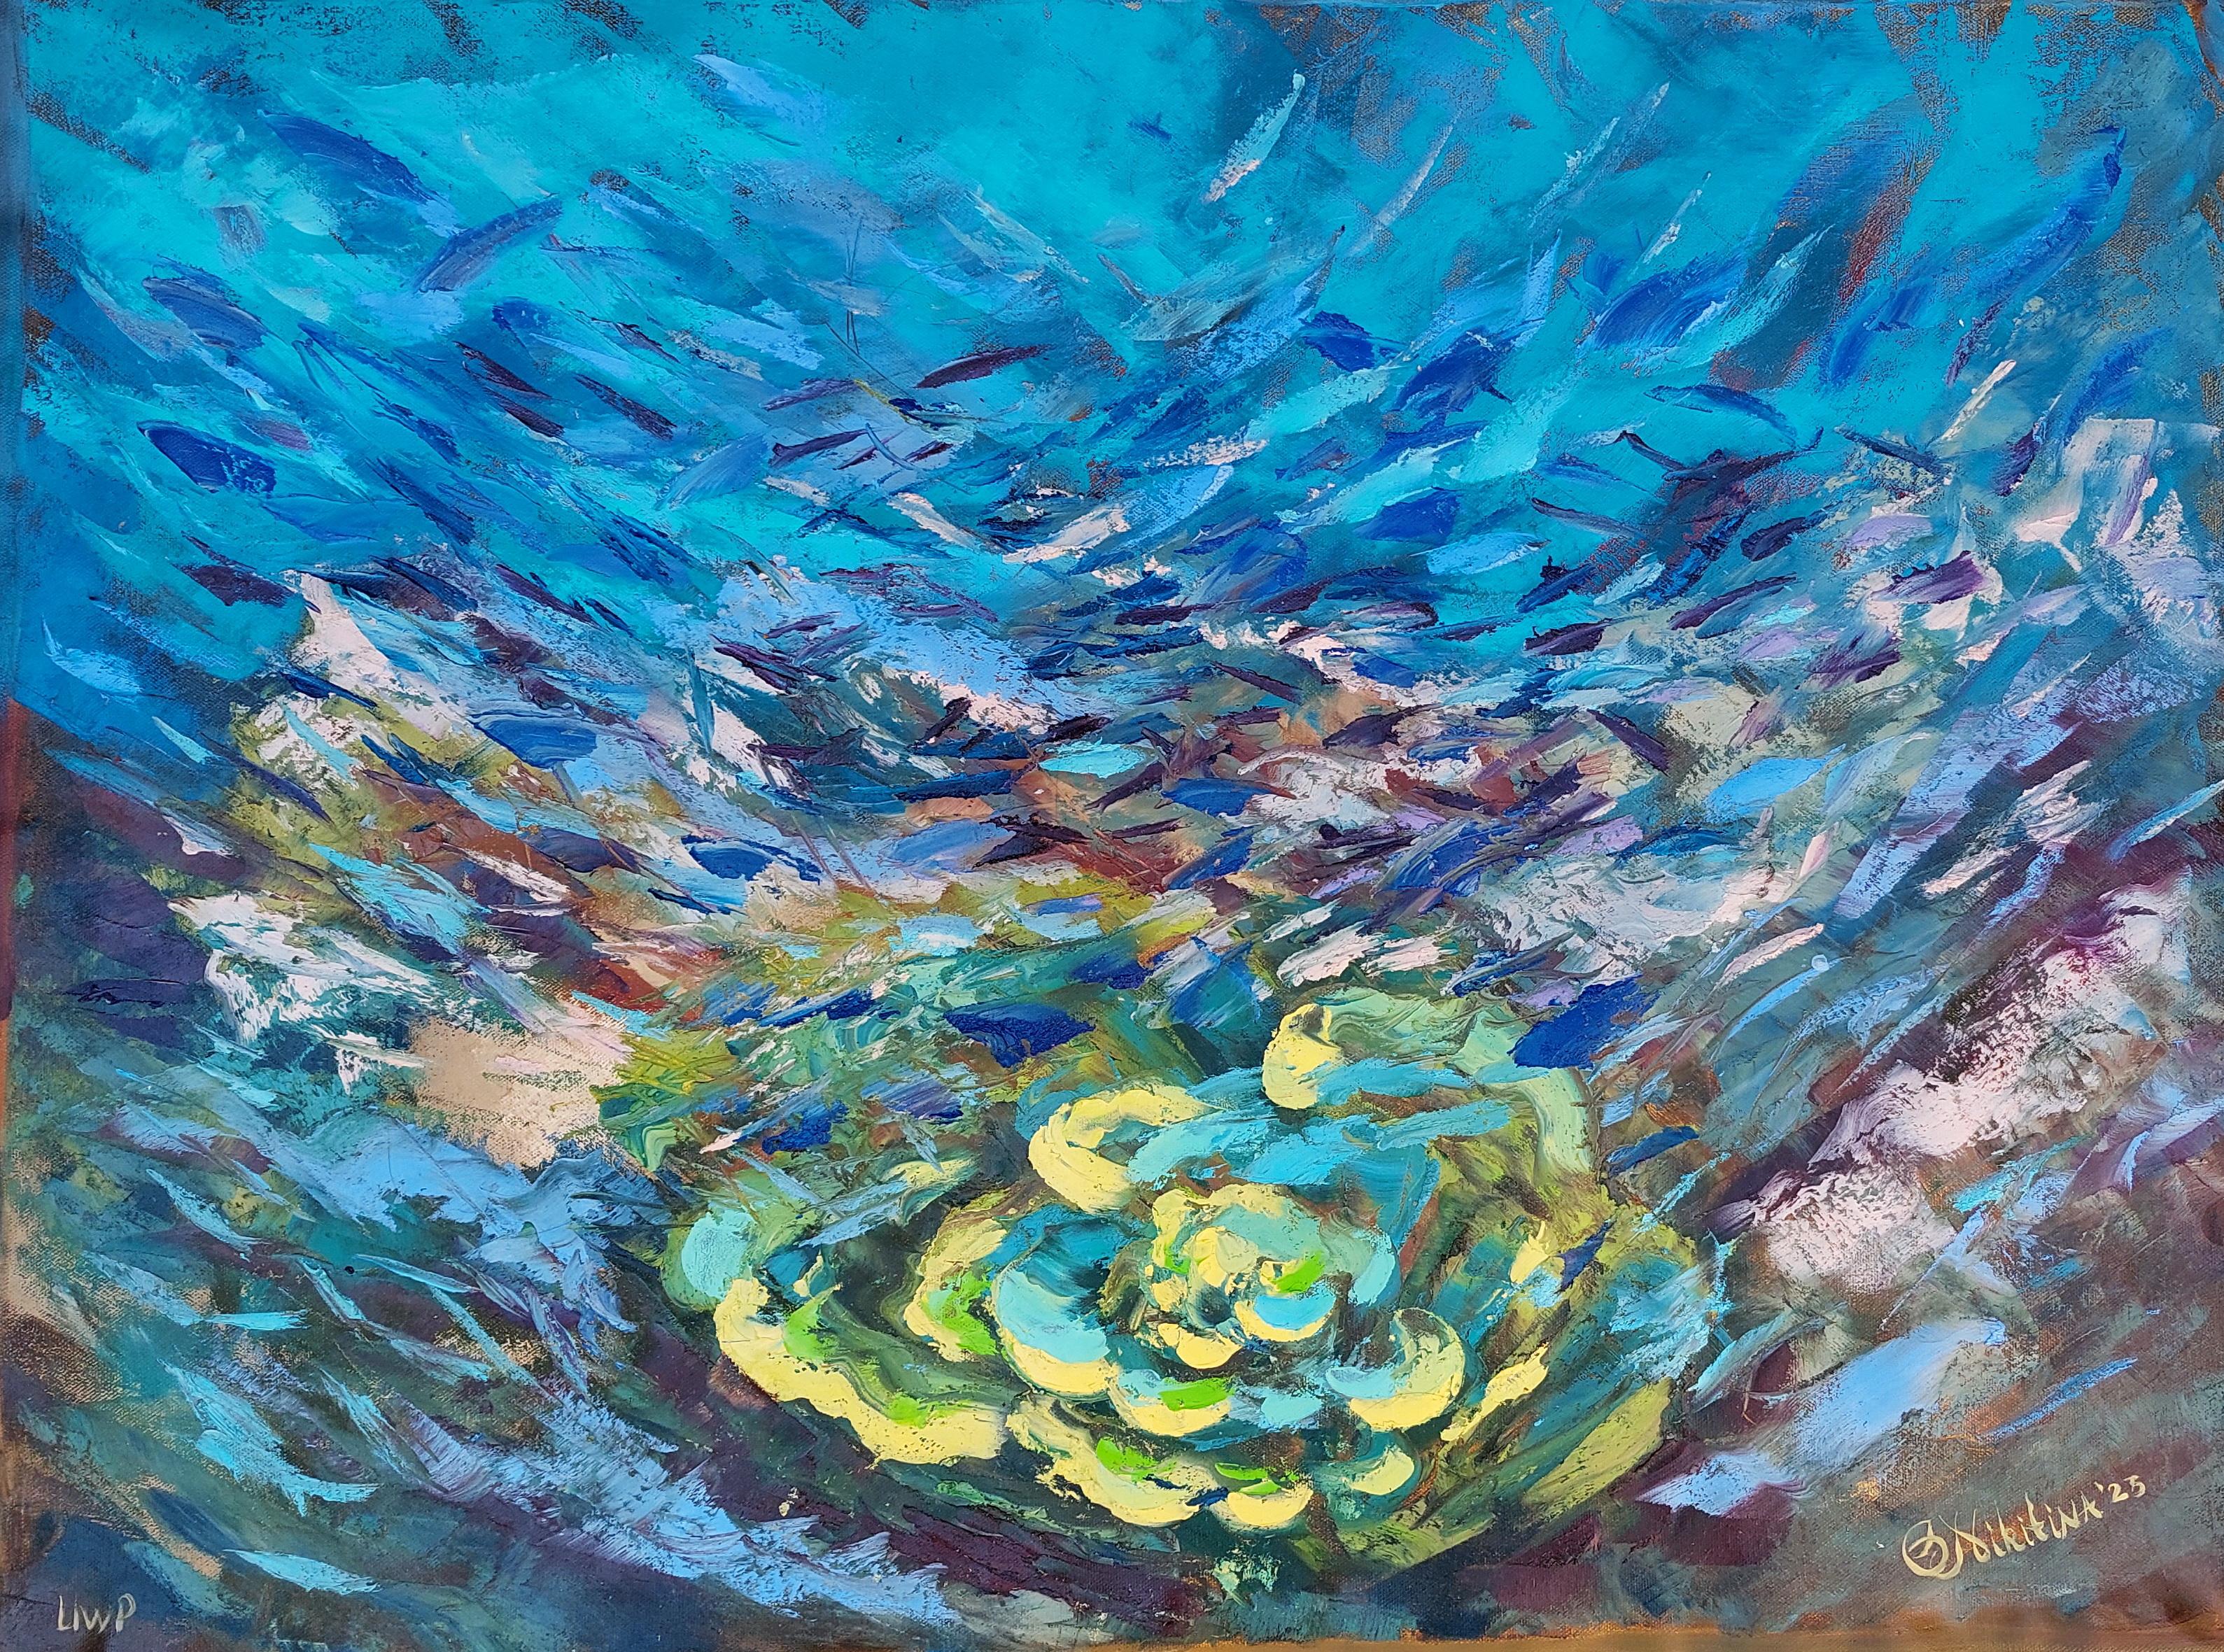 Olga Nikitina Abstract Painting - Underwater Painting Coral Reef was made underwater at the depth of 6 meters